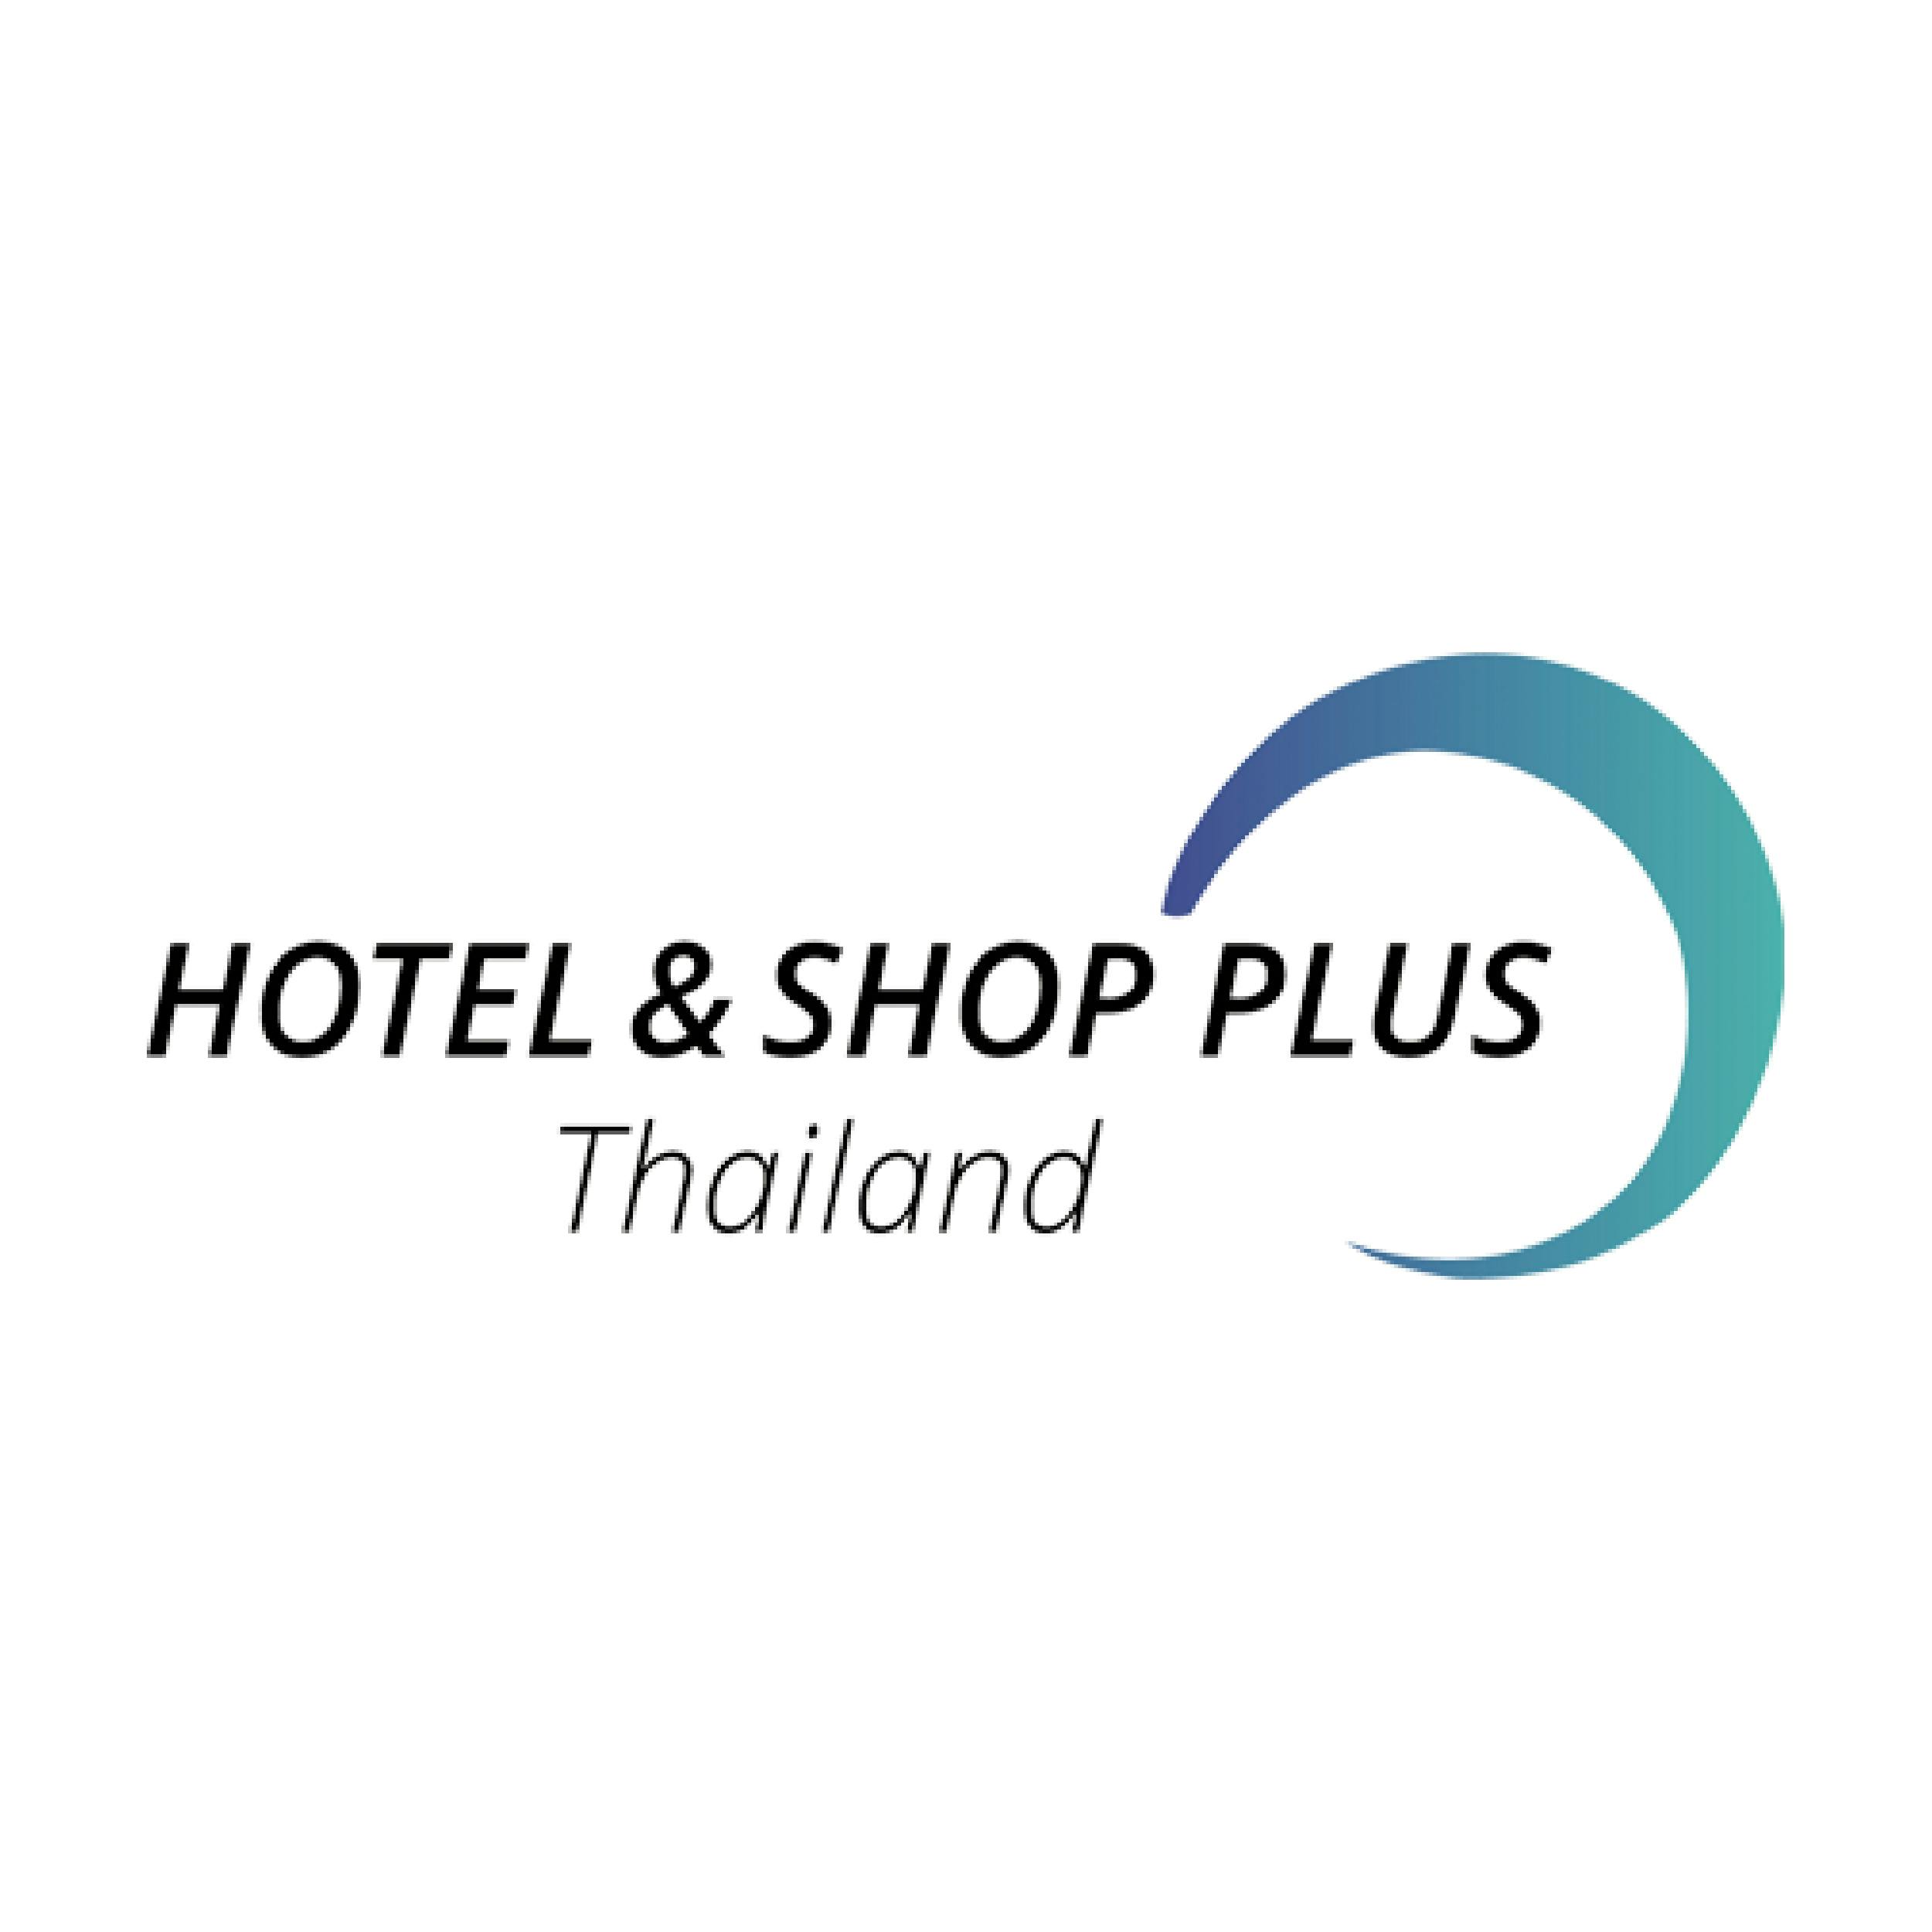 Hotel & Shop Plus Thailand